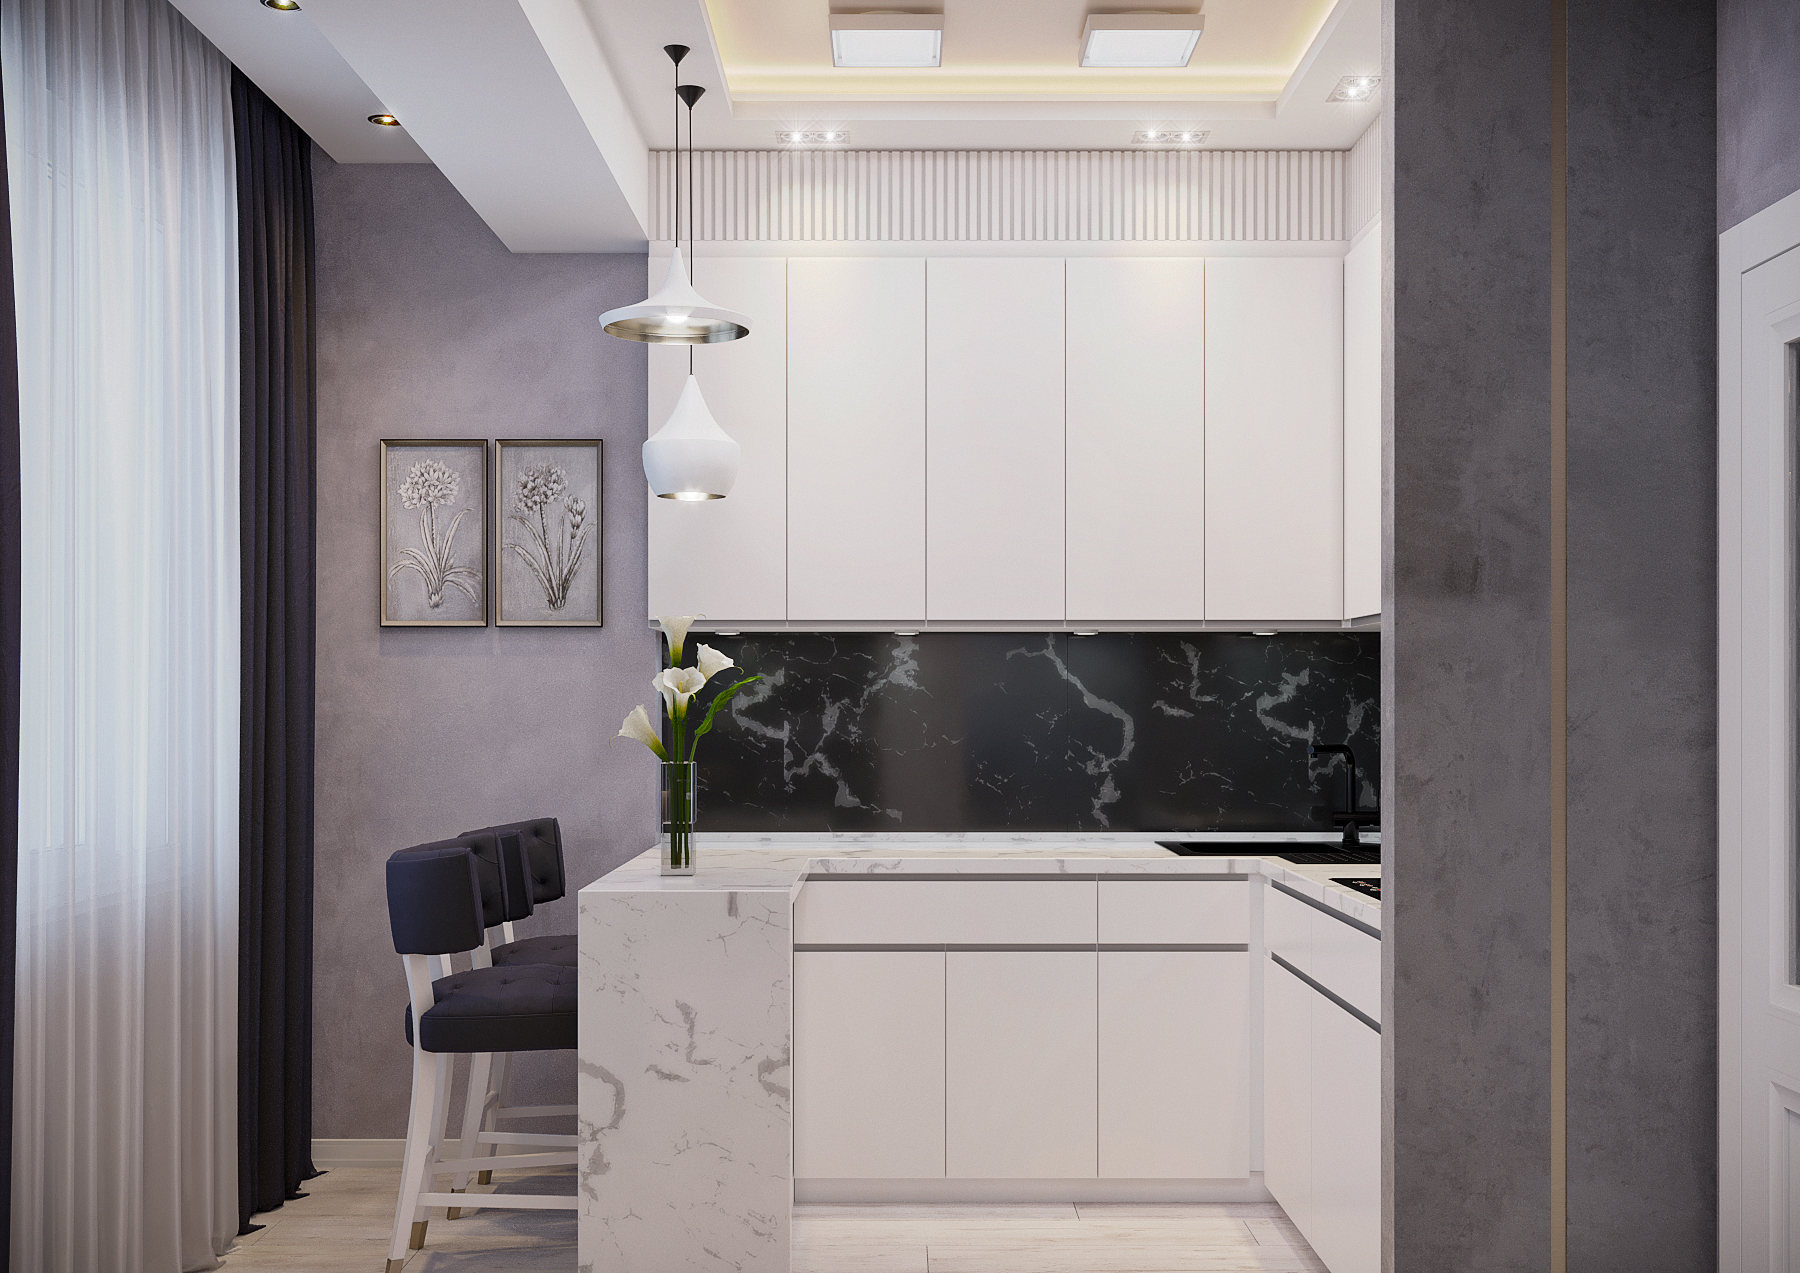 Cozinha-sala em 3d max corona render imagem